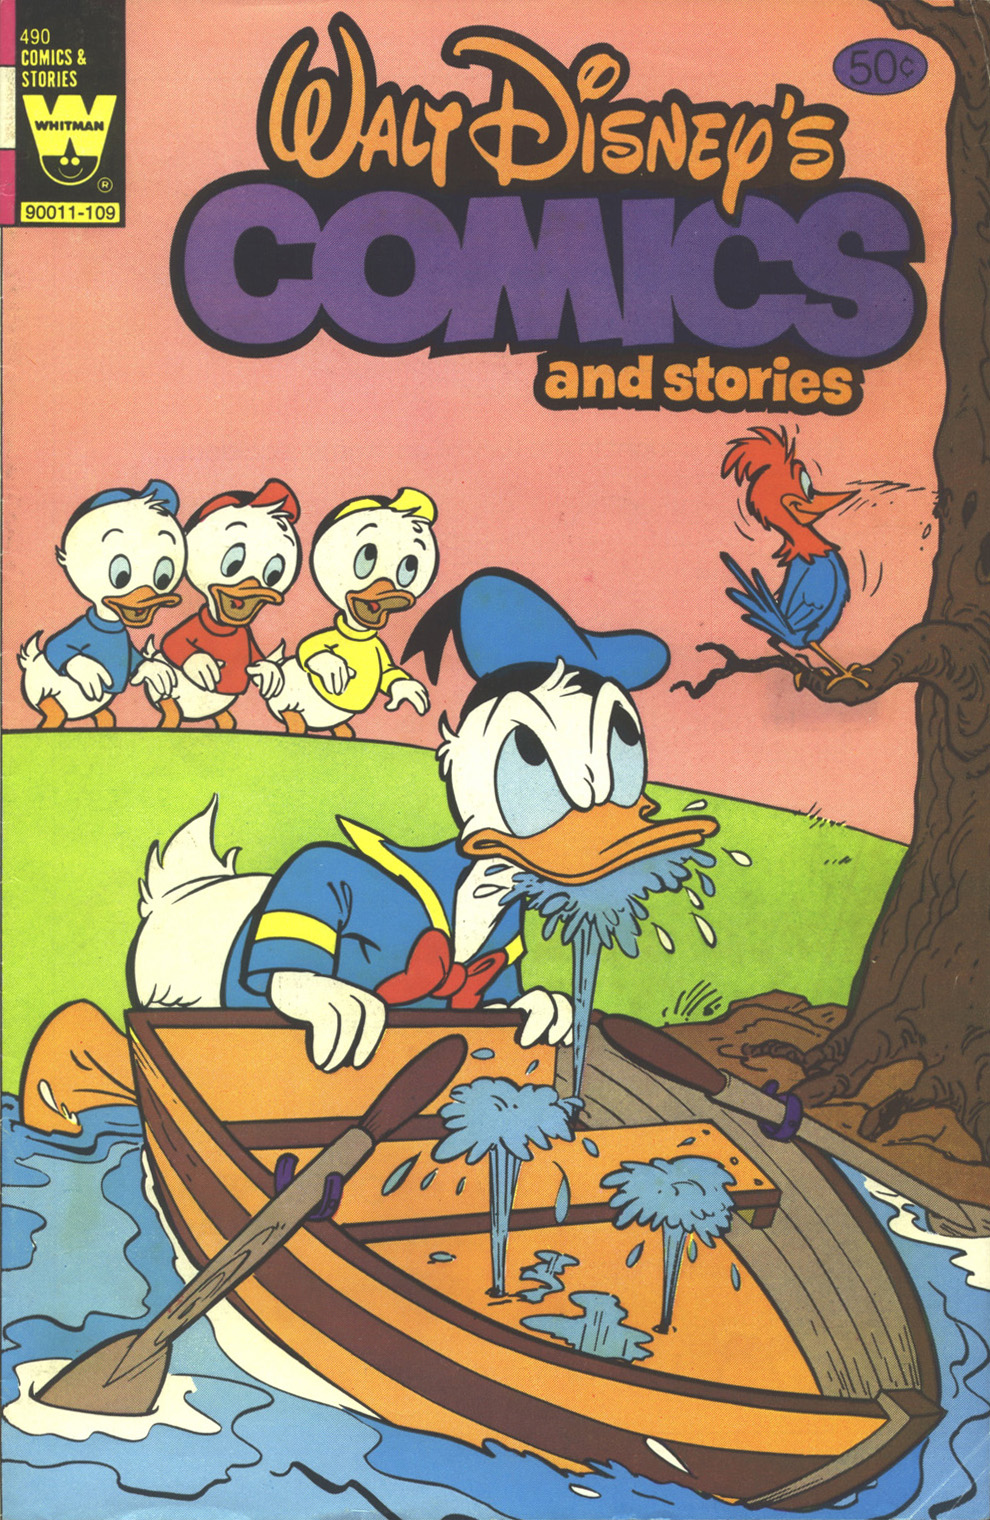 Walt Disneys Comics and Stories 490 Page 1